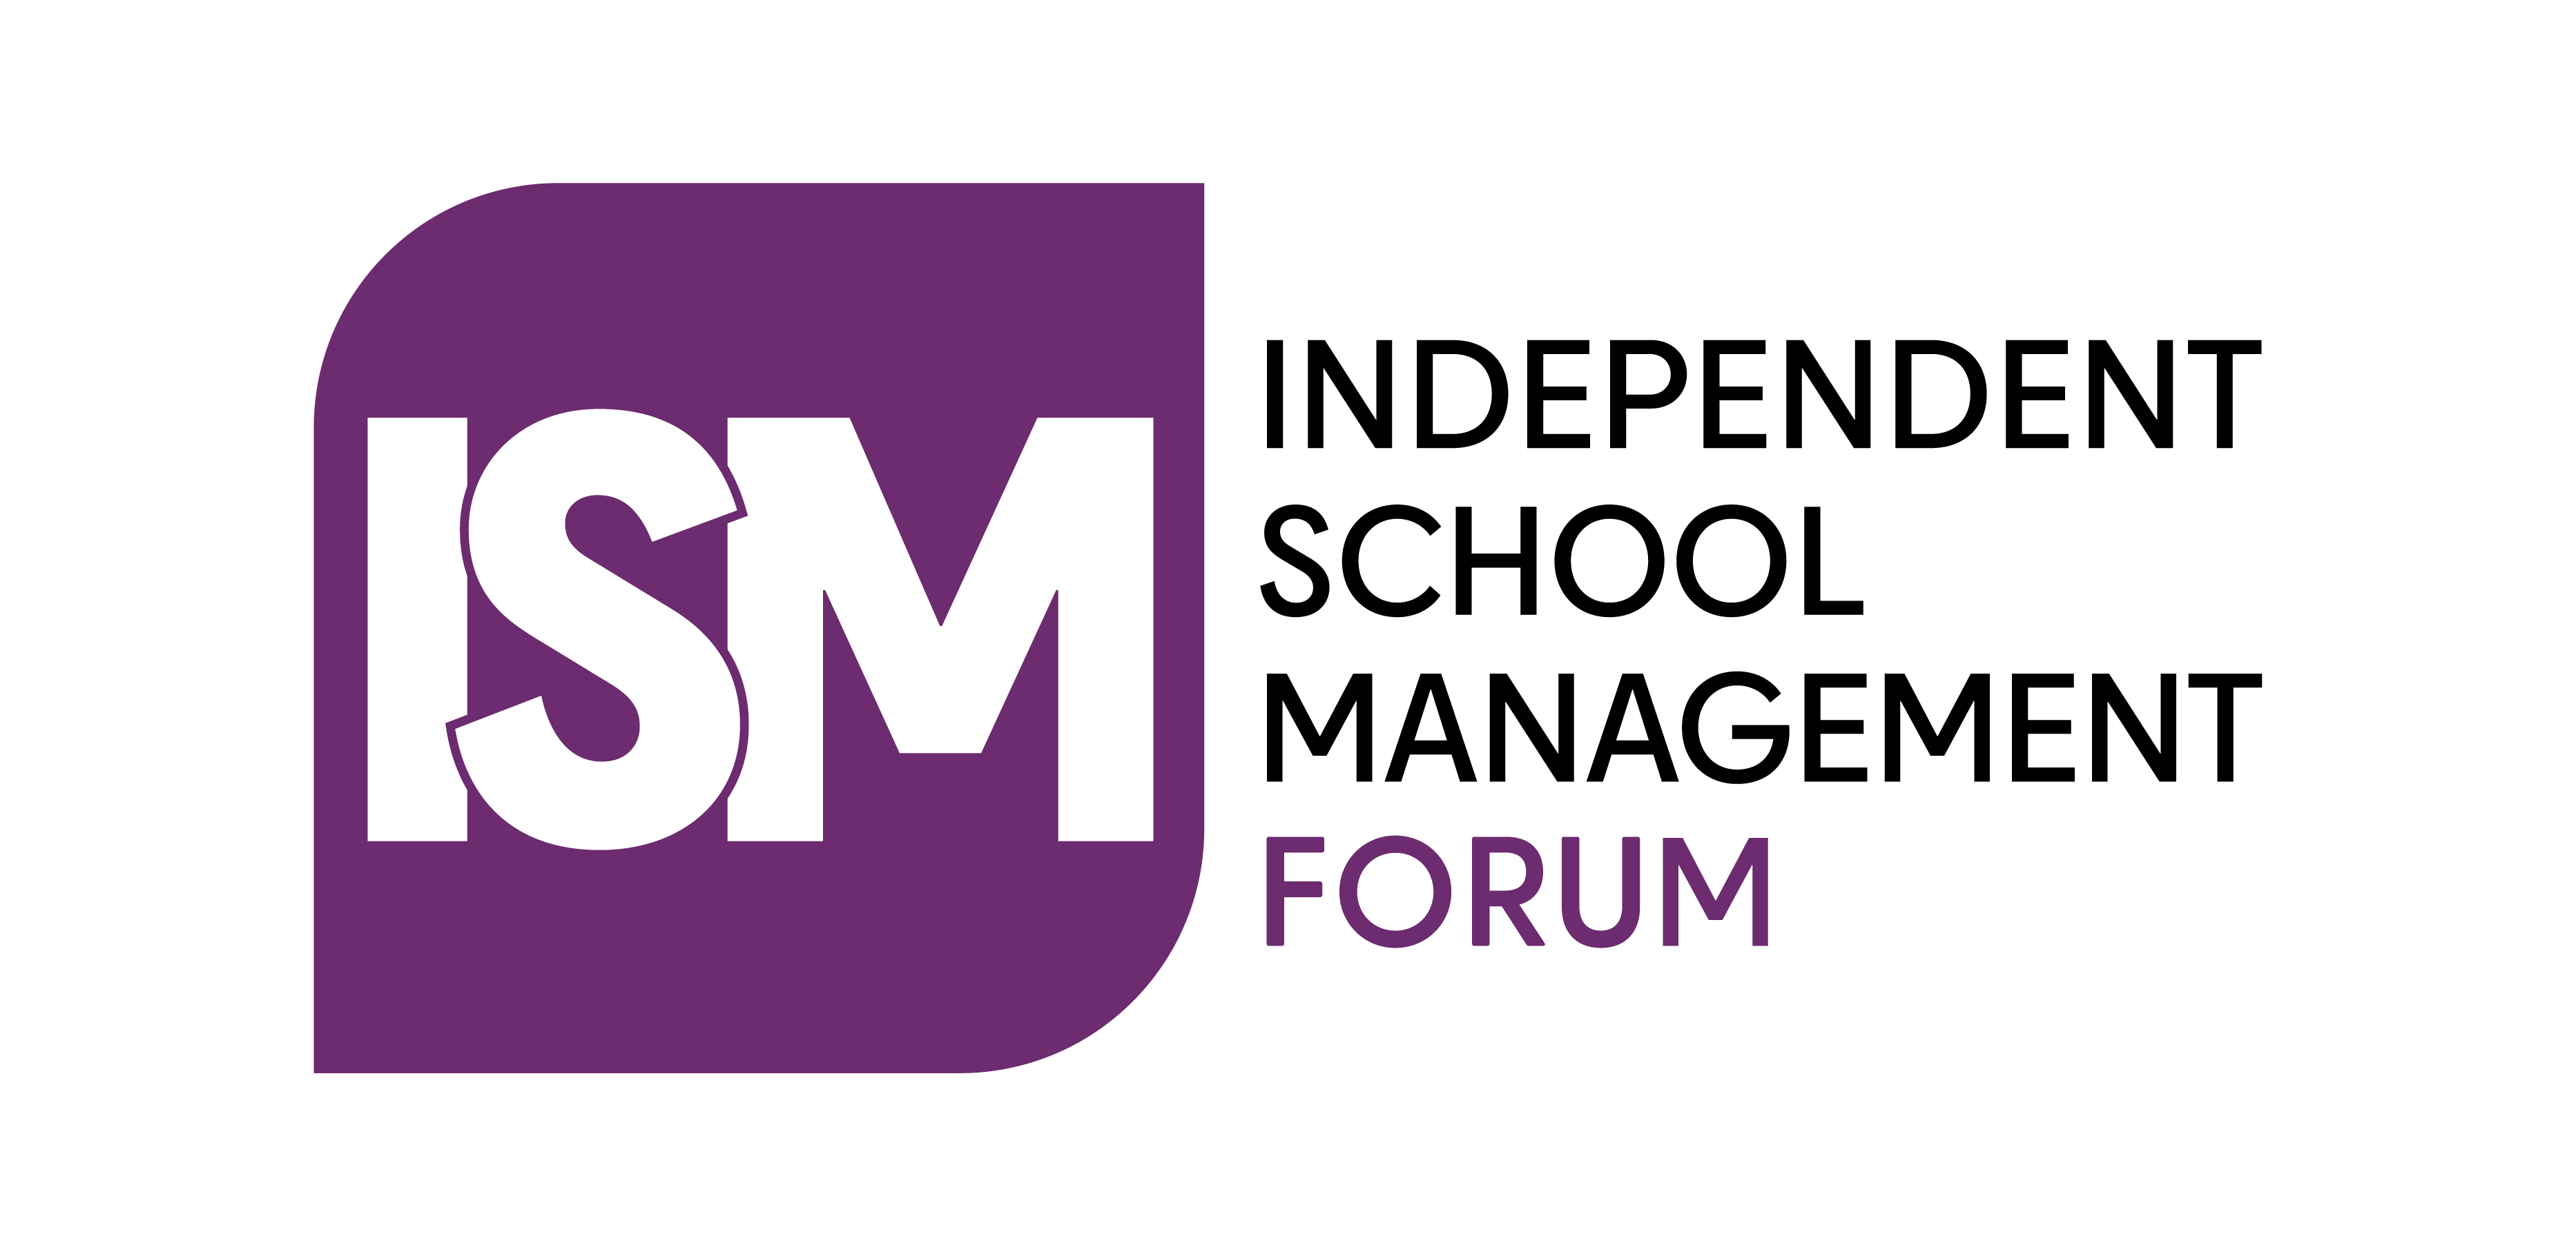 ISM Forum